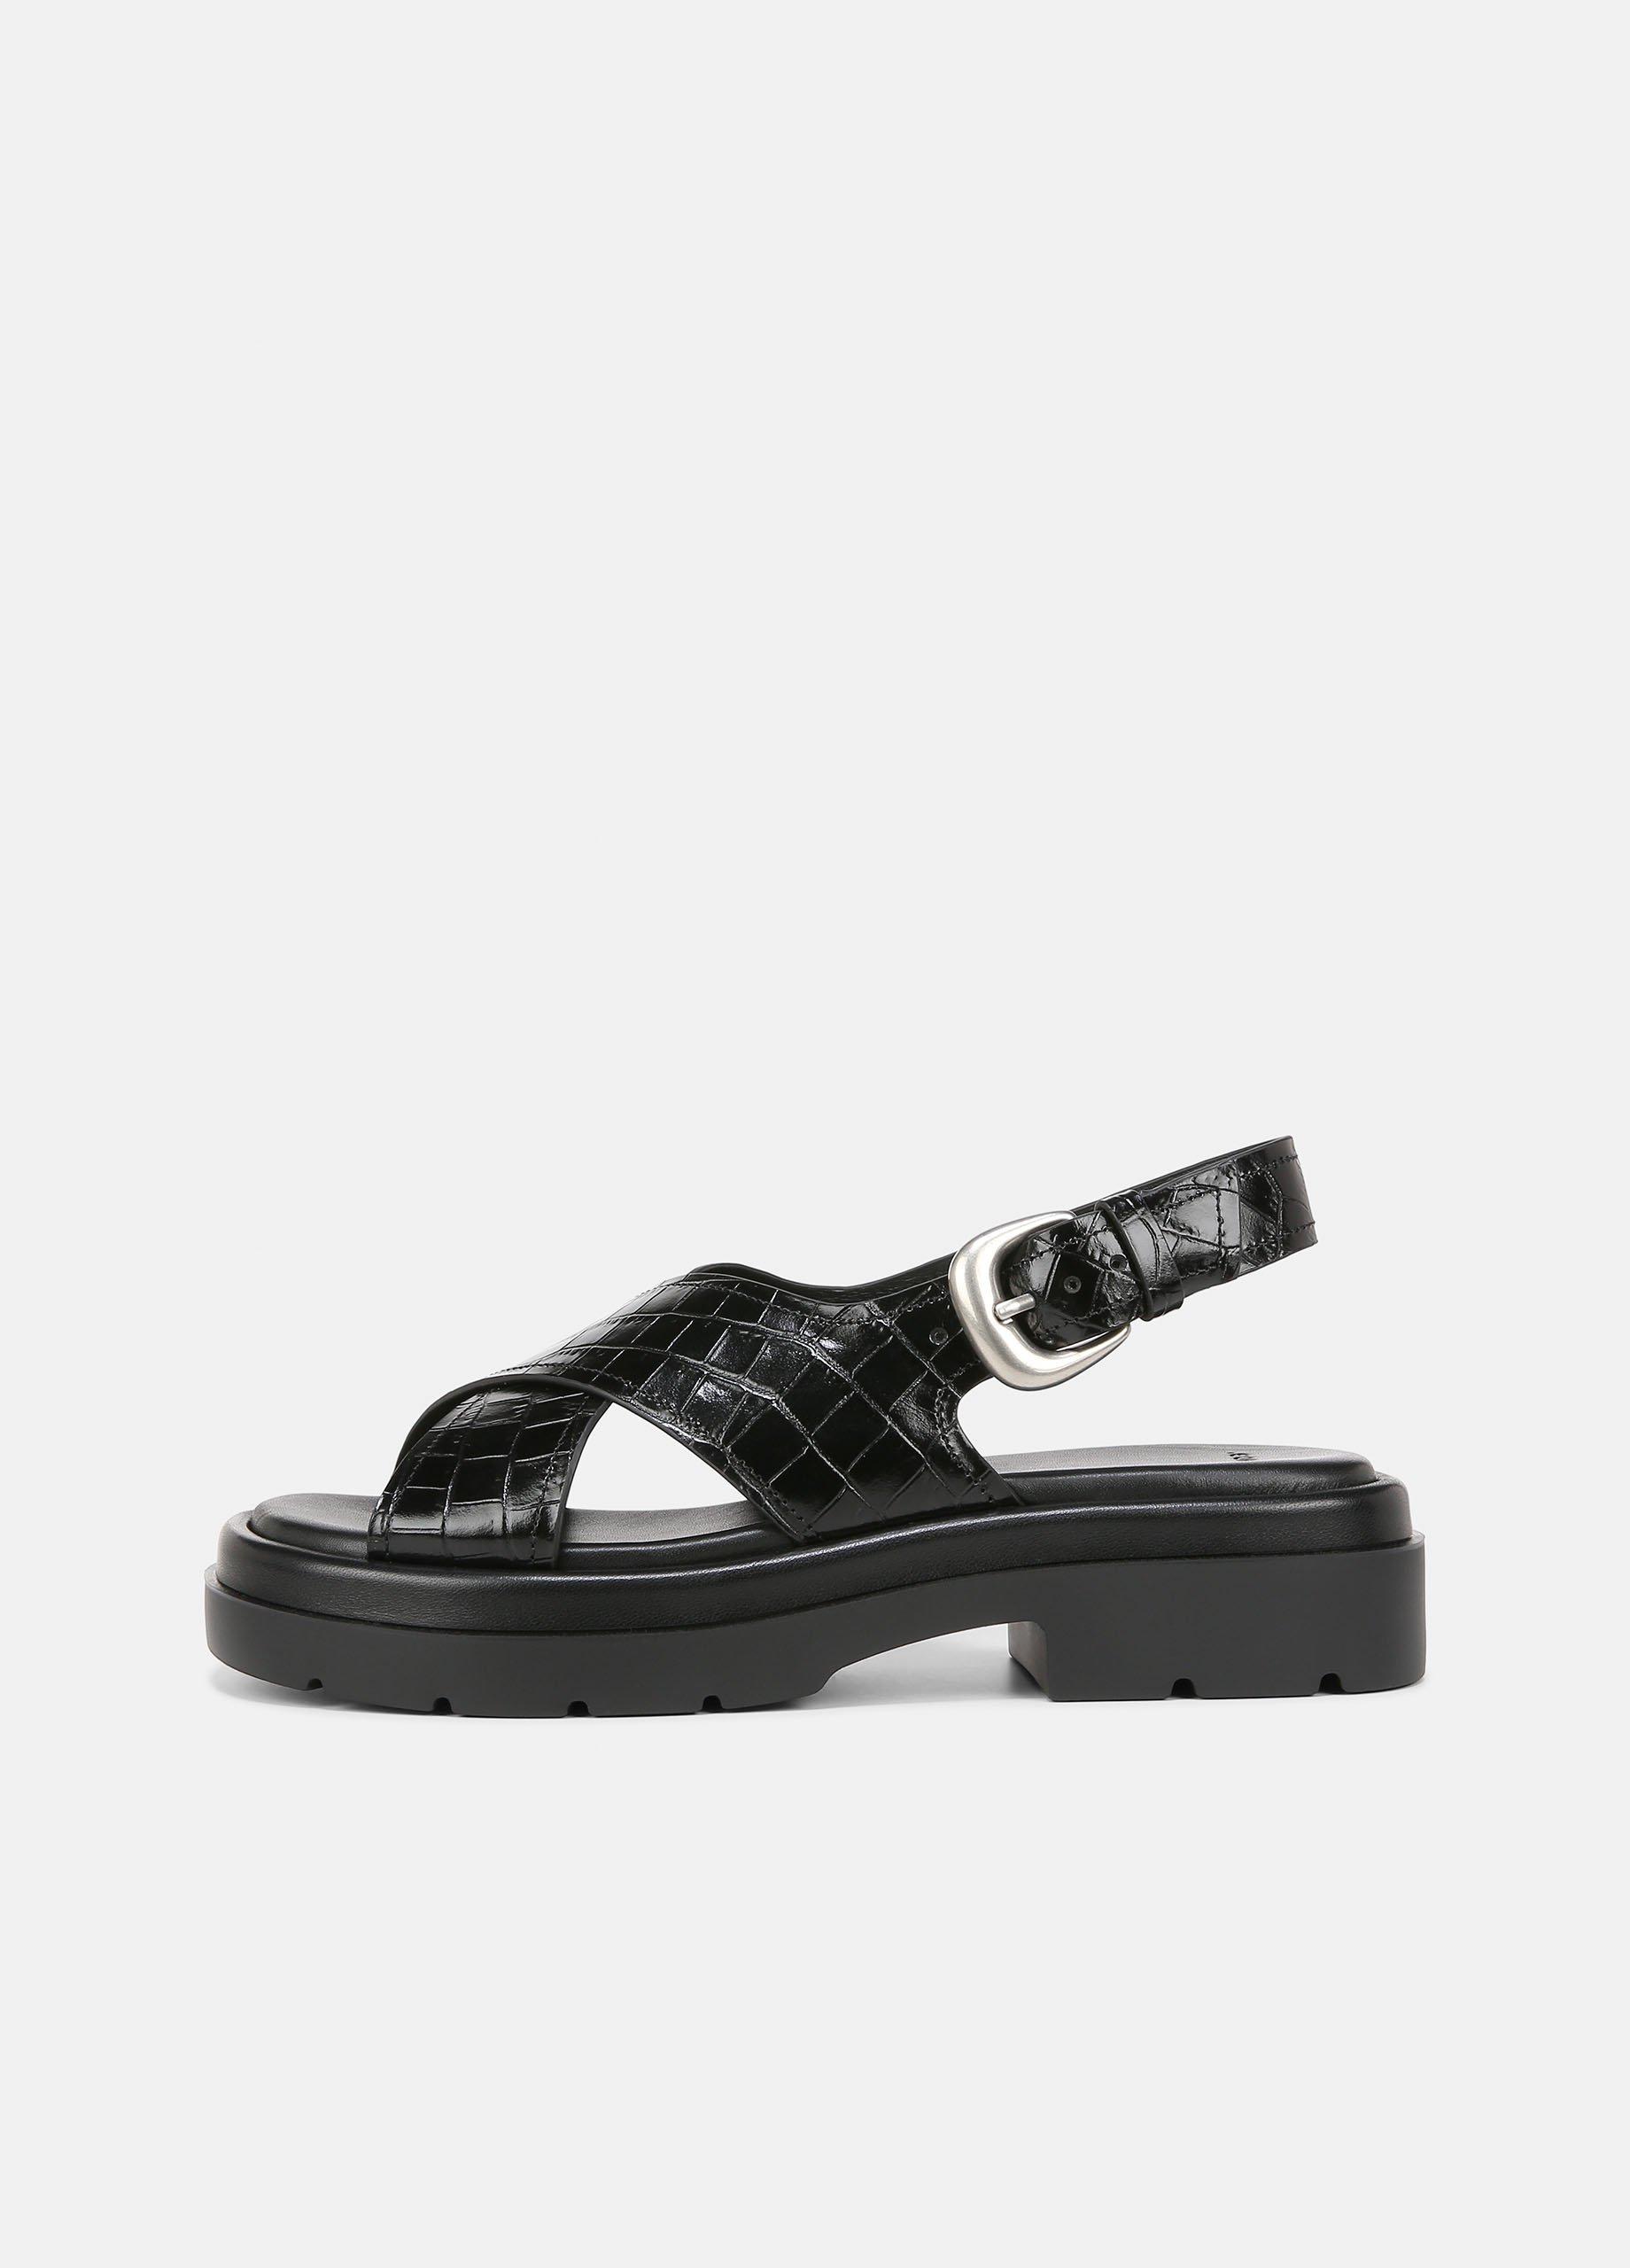 Helena Croc-Embossed Leather Lug-Sole Sandal in Sandals | Vince